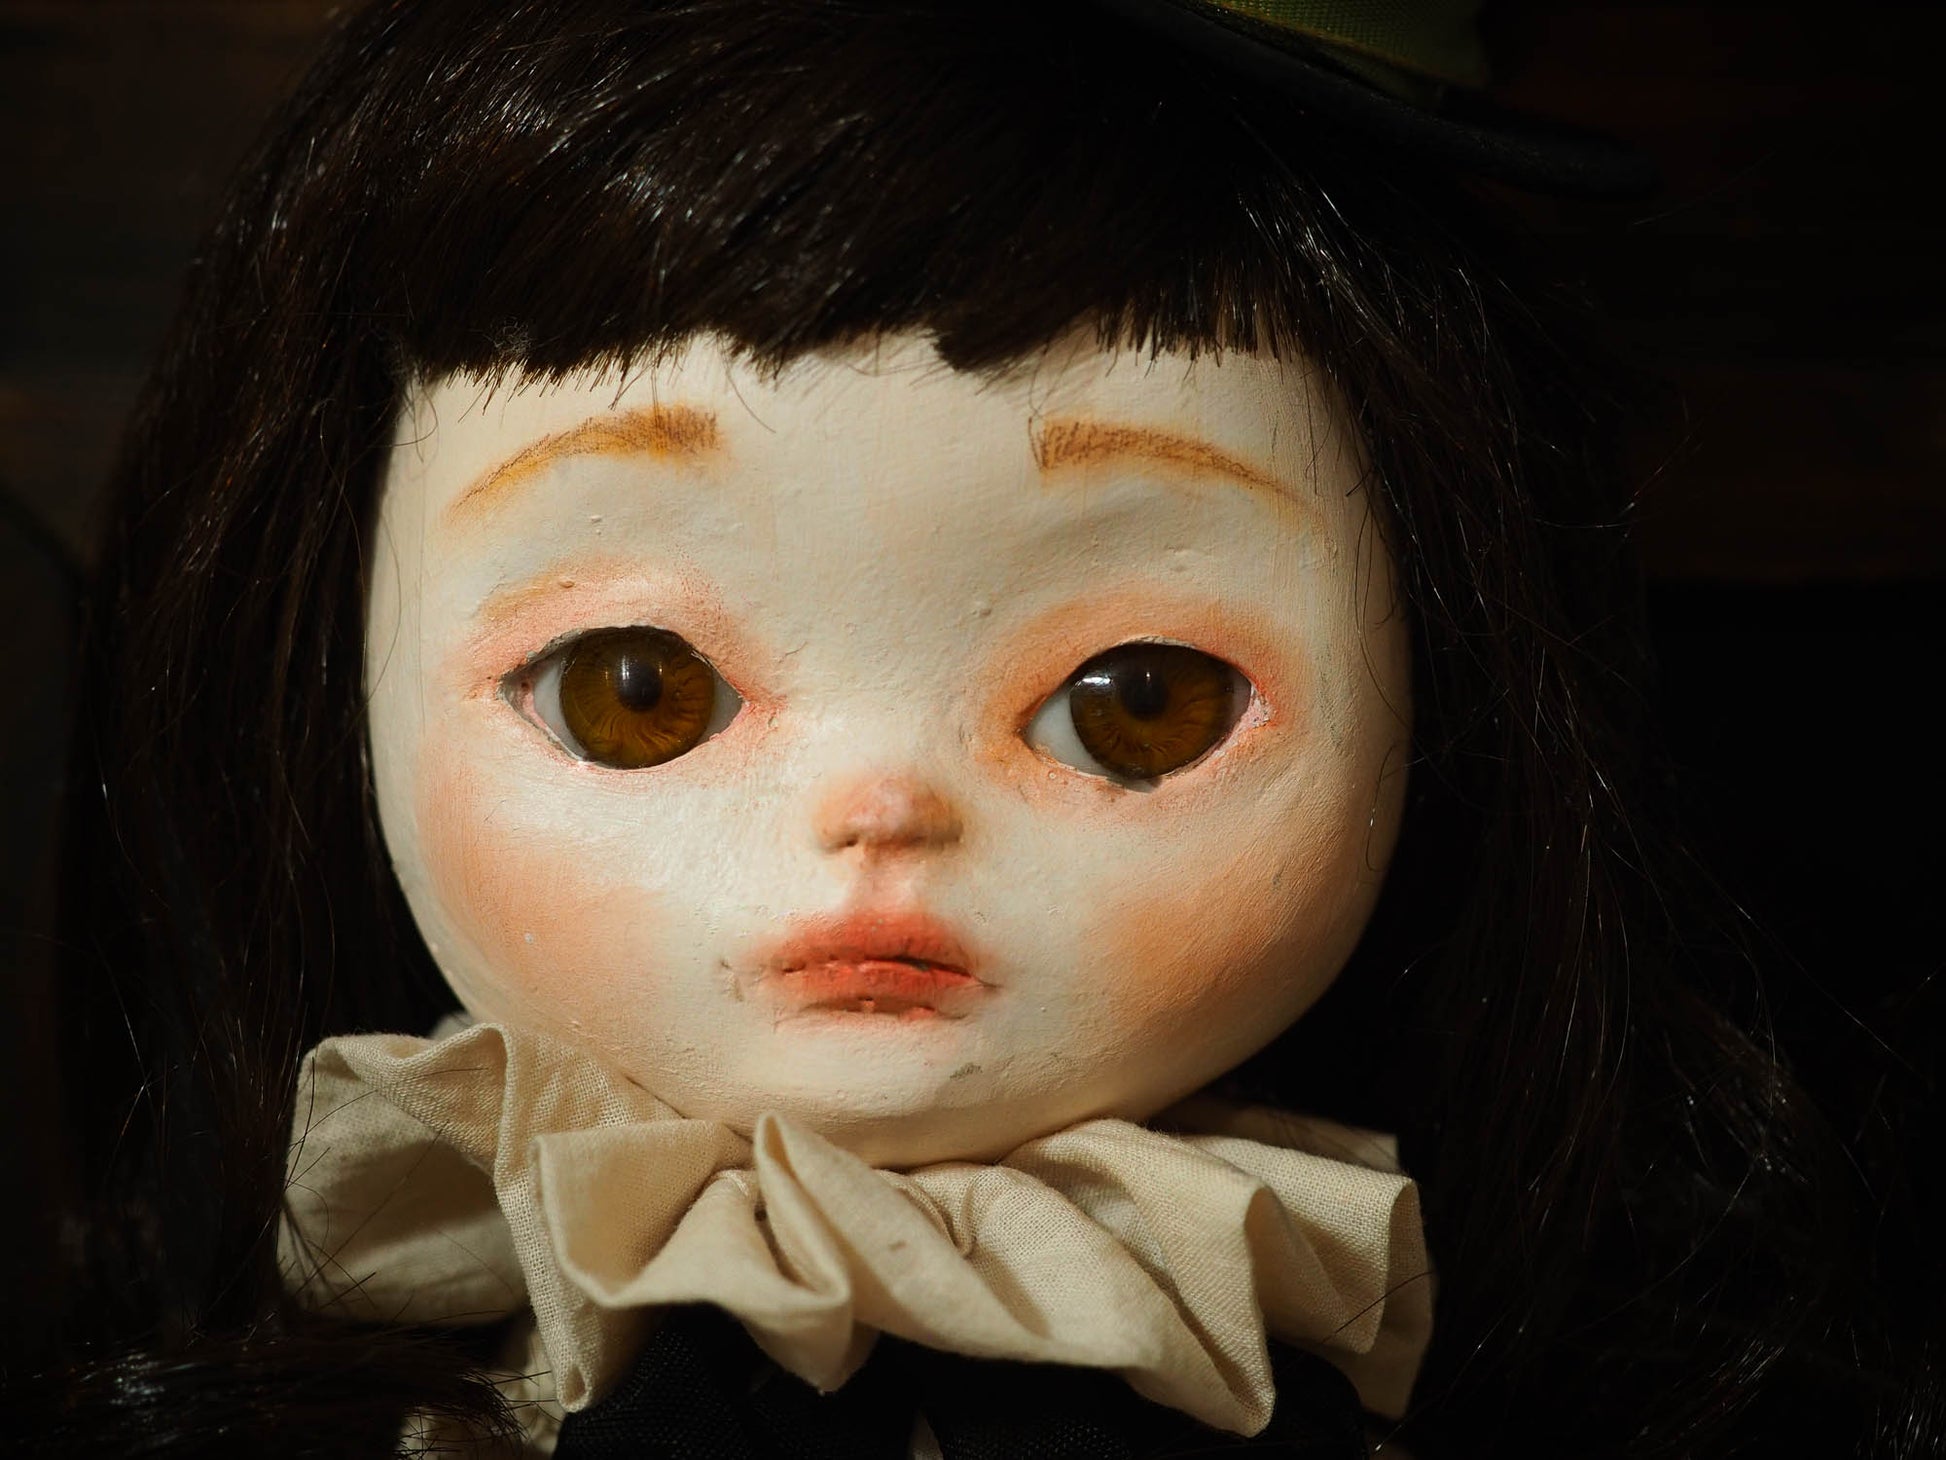 ALICE IN WONDERLAND, Art Doll by Danita Art